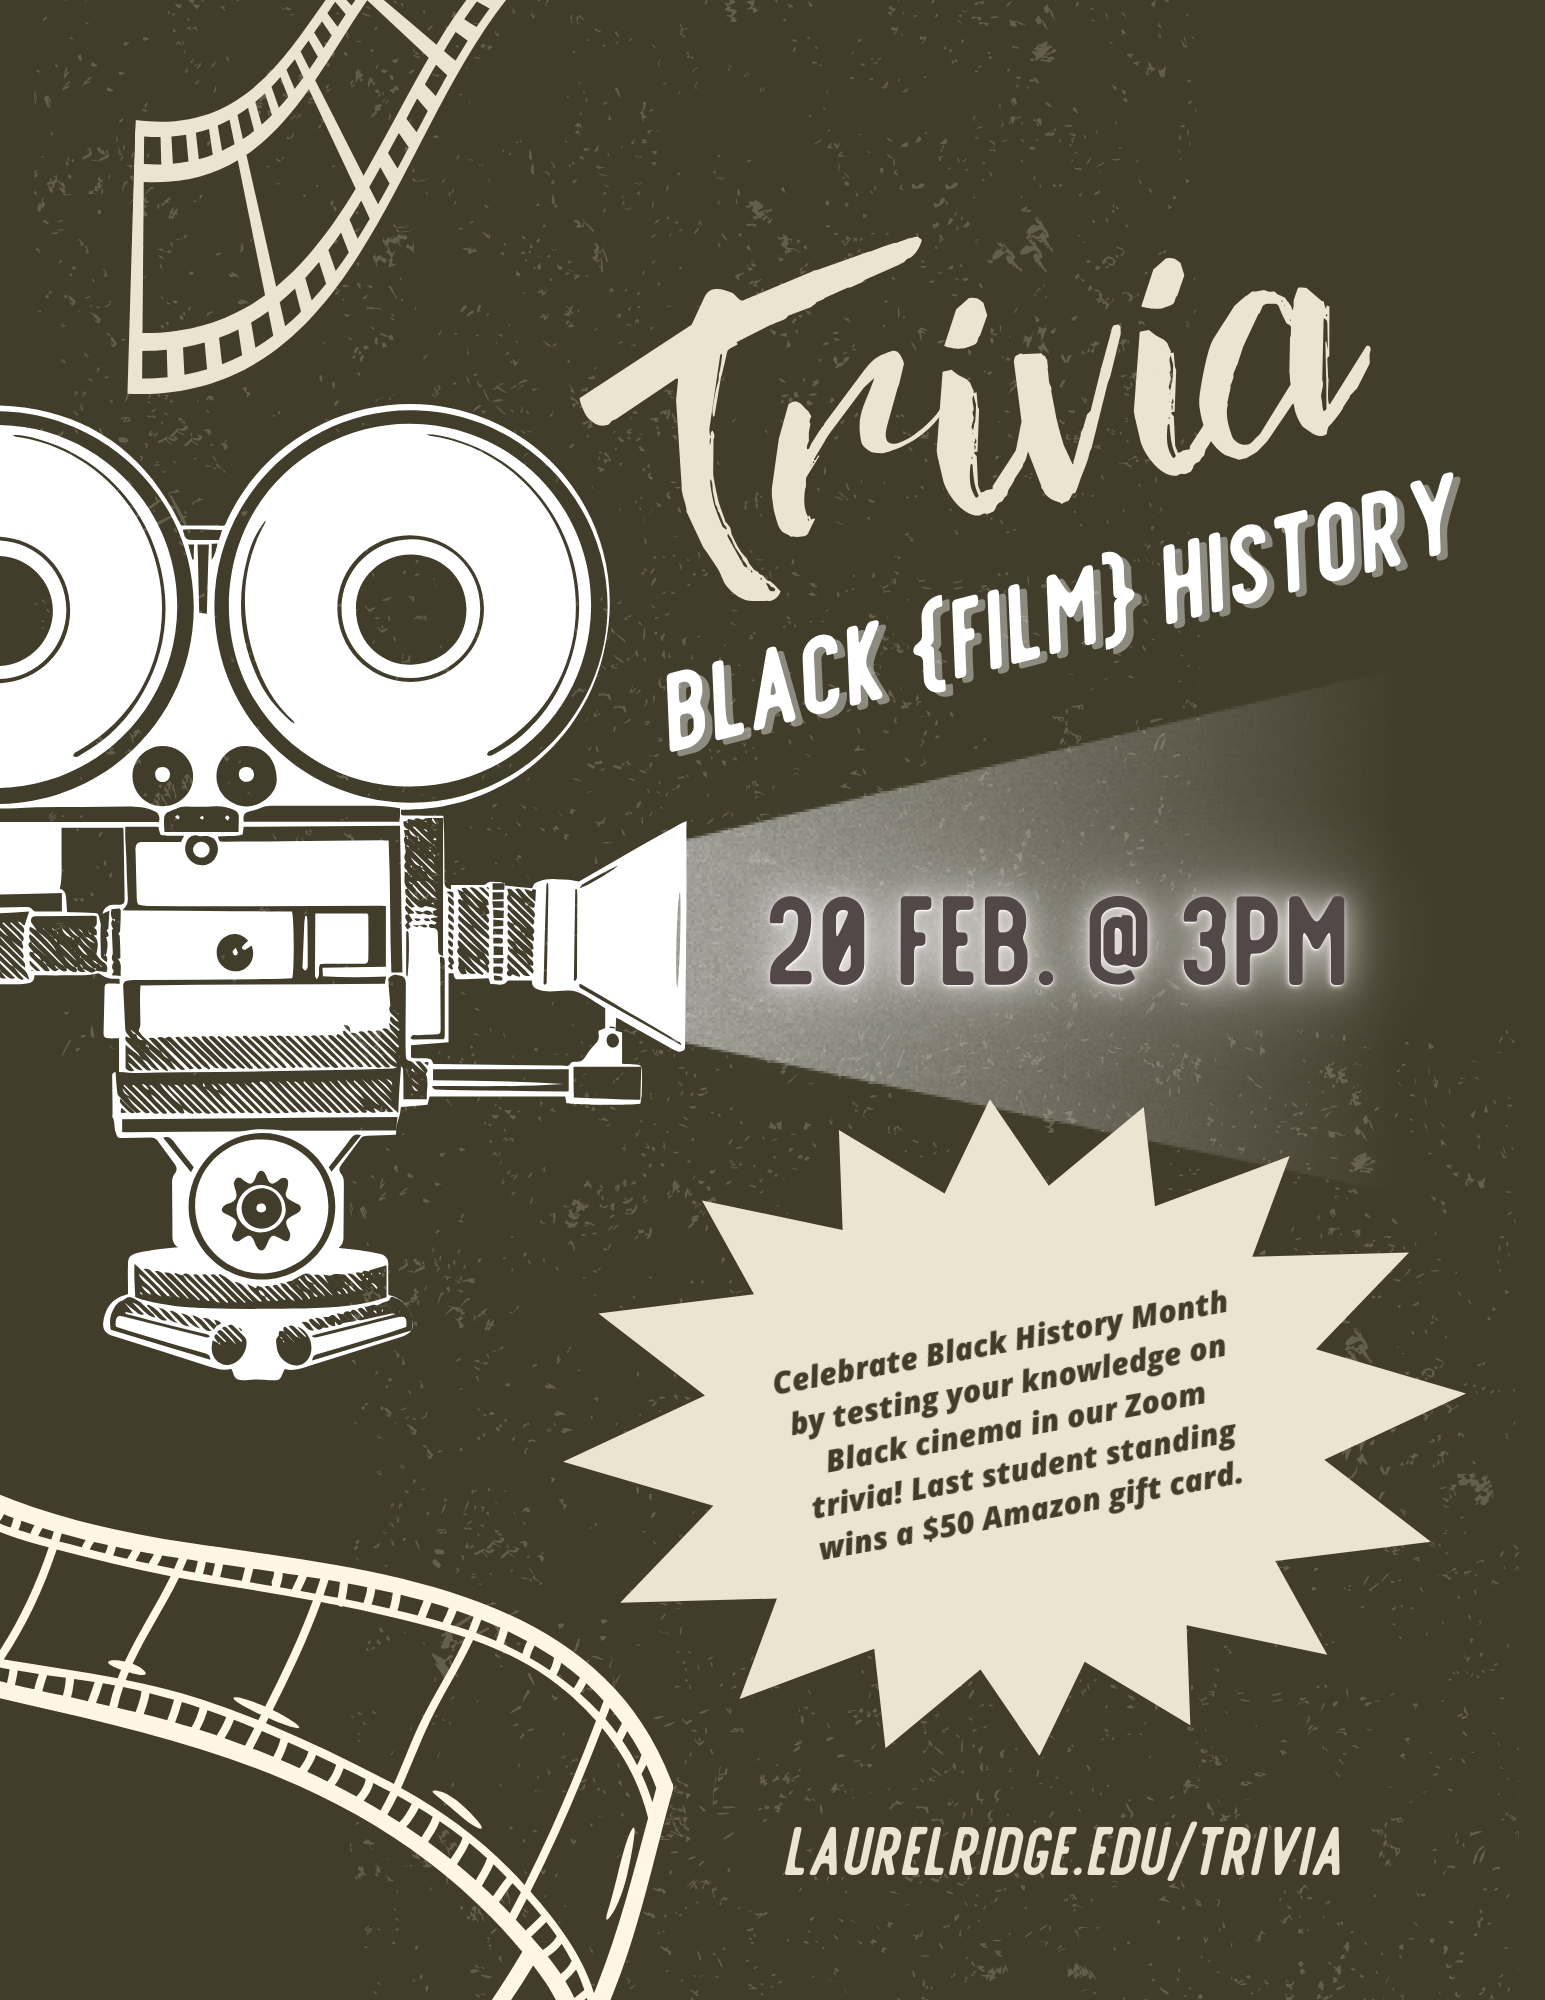 black film history trivia flyer